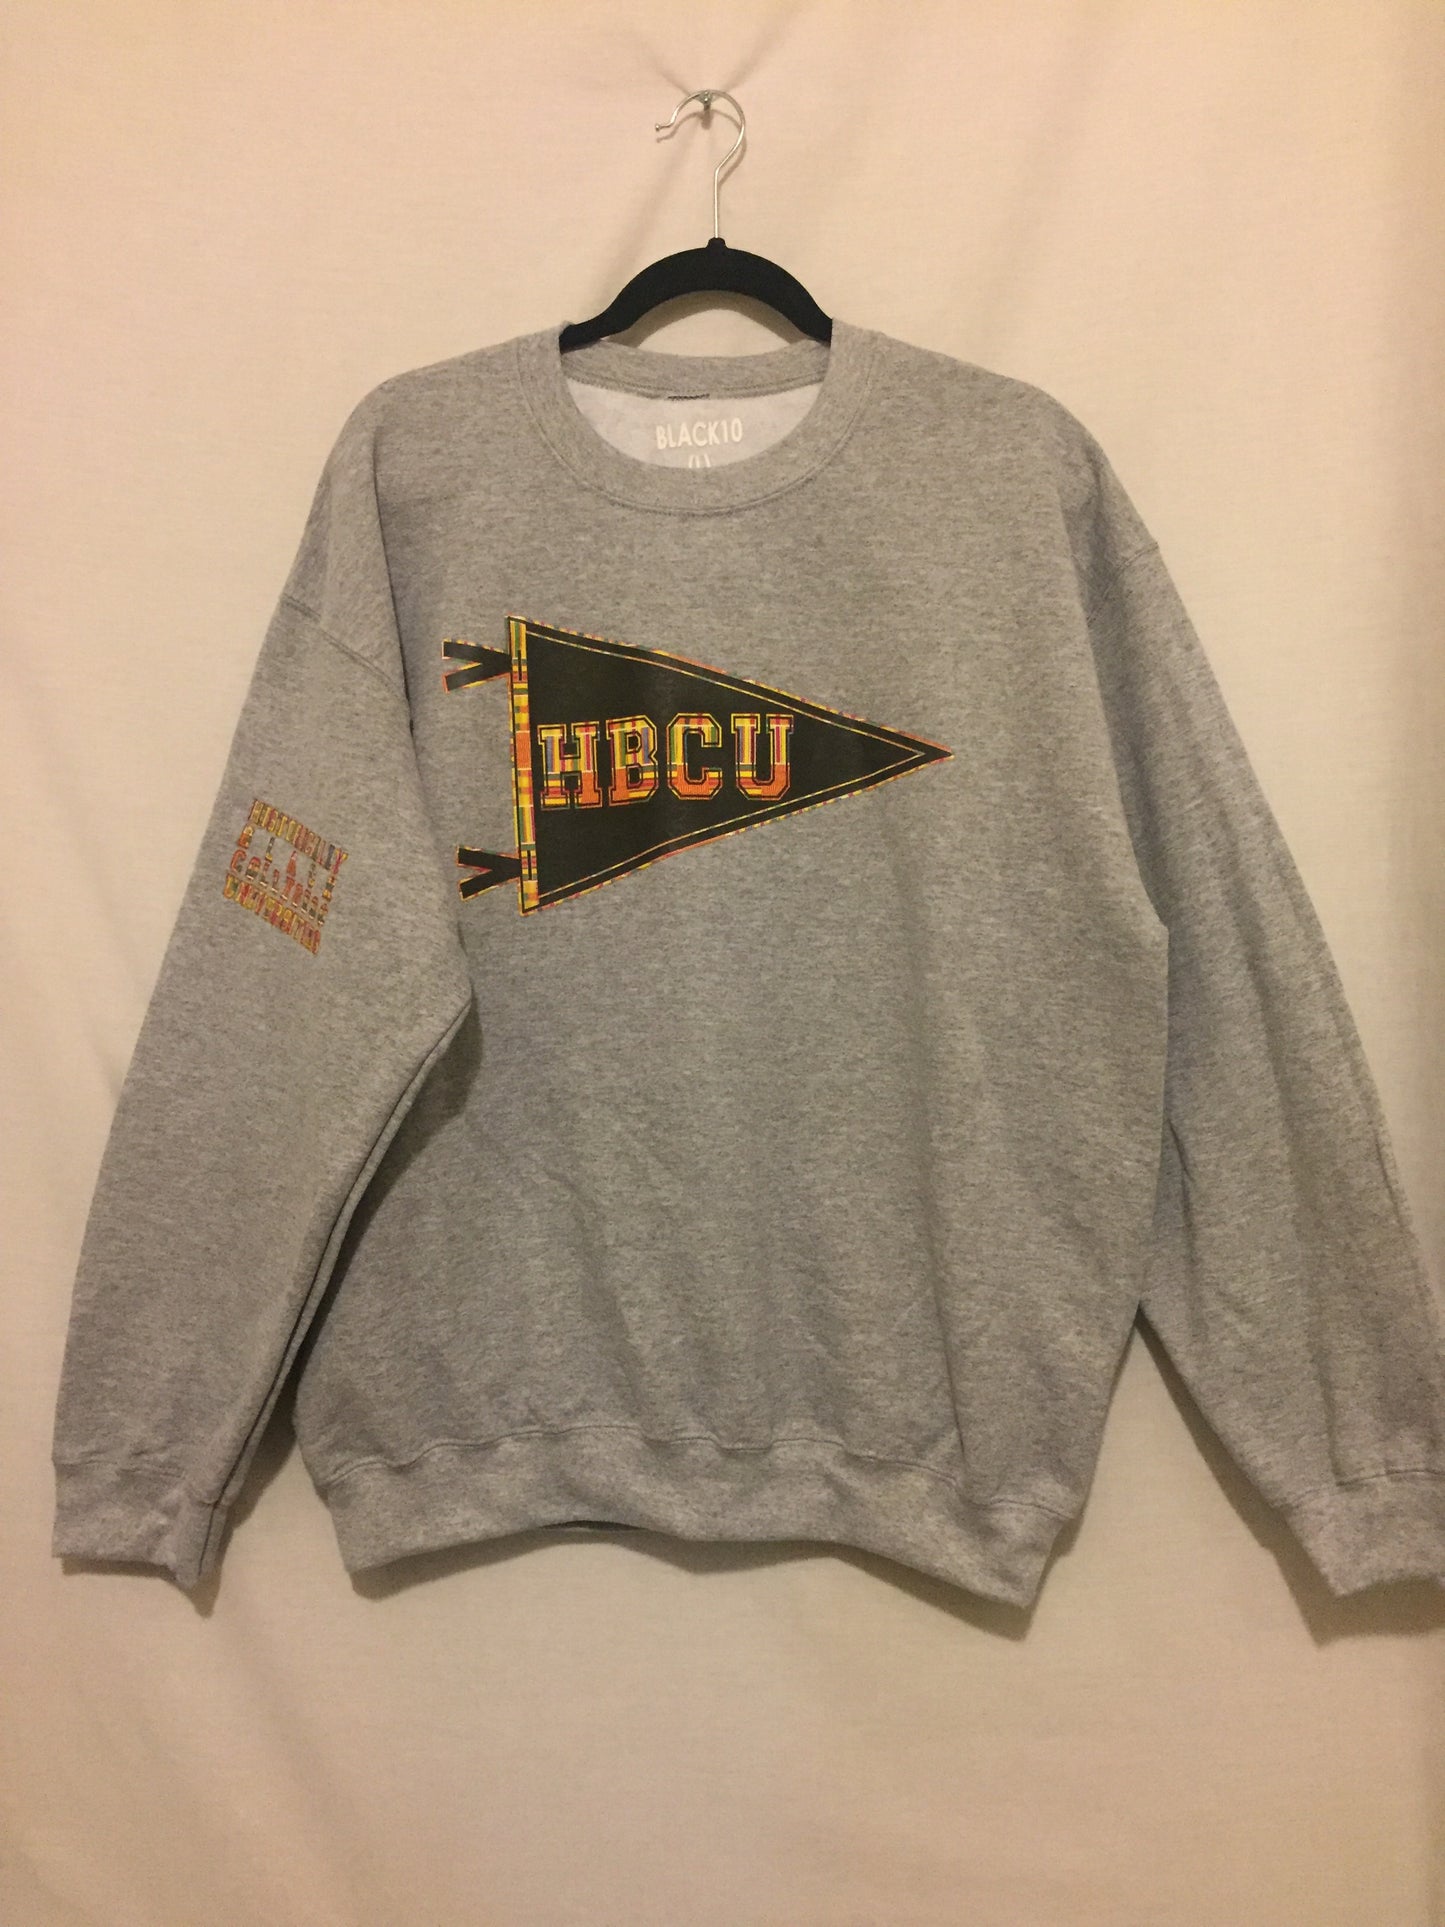 HBCU Sweat Shirt - Black10.com